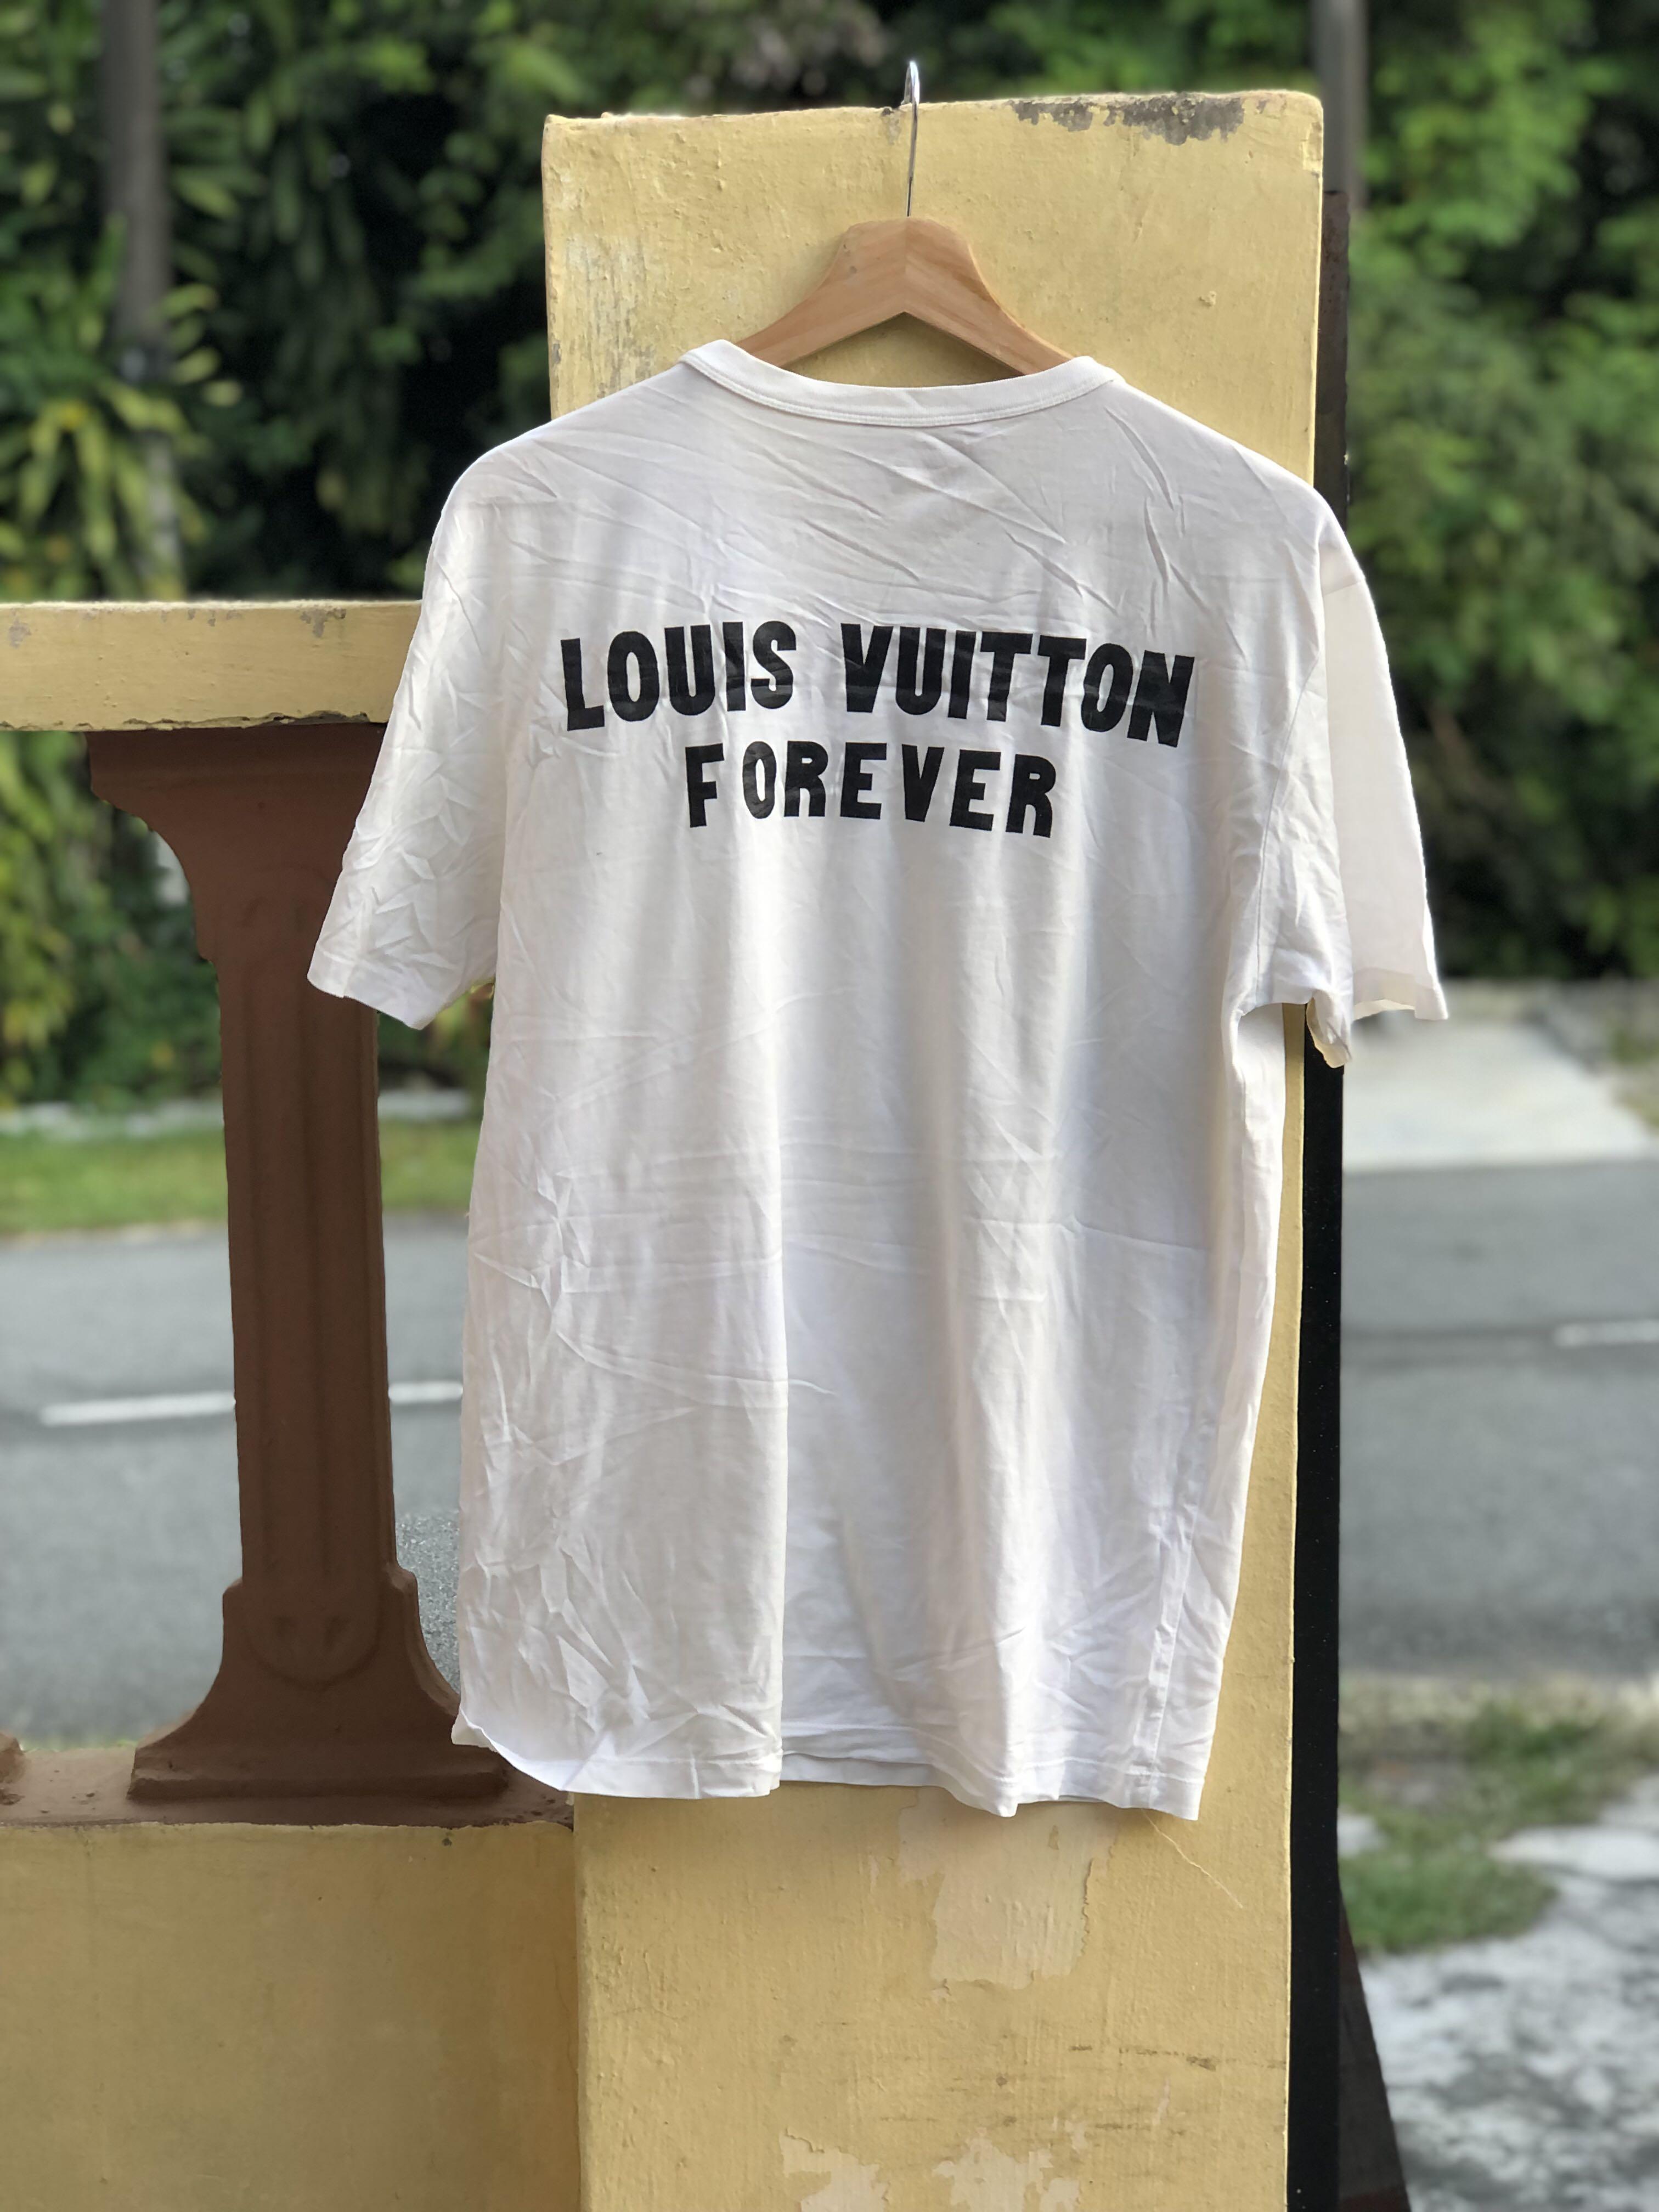 Louis vuitton Polyster Cotton Shirt